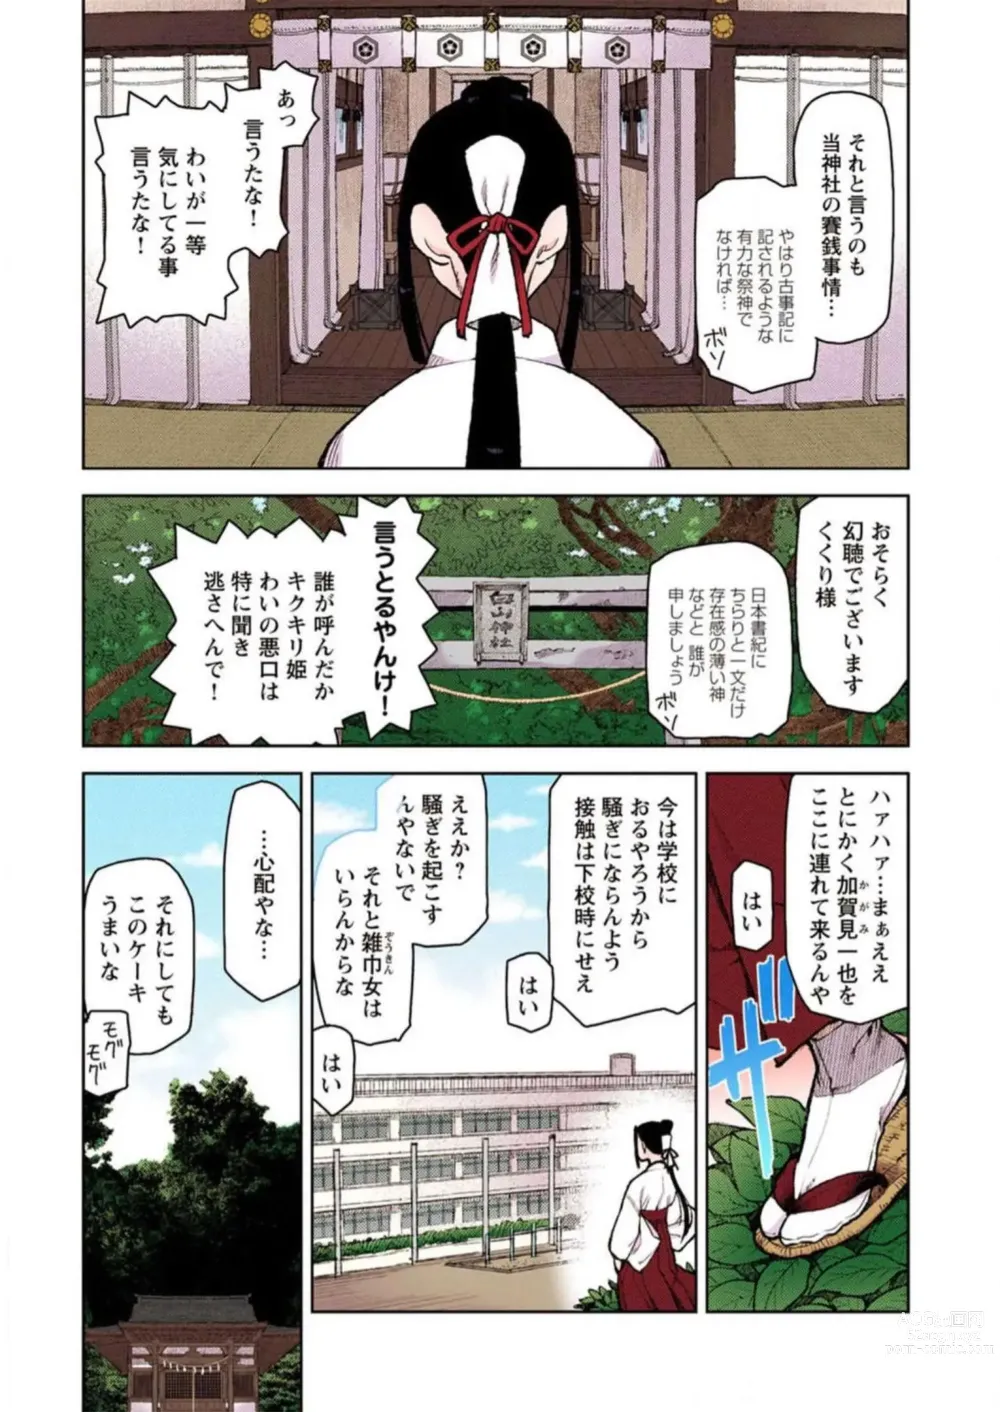 Page 9 of manga Tsugumomo Digital Colored Comics V2